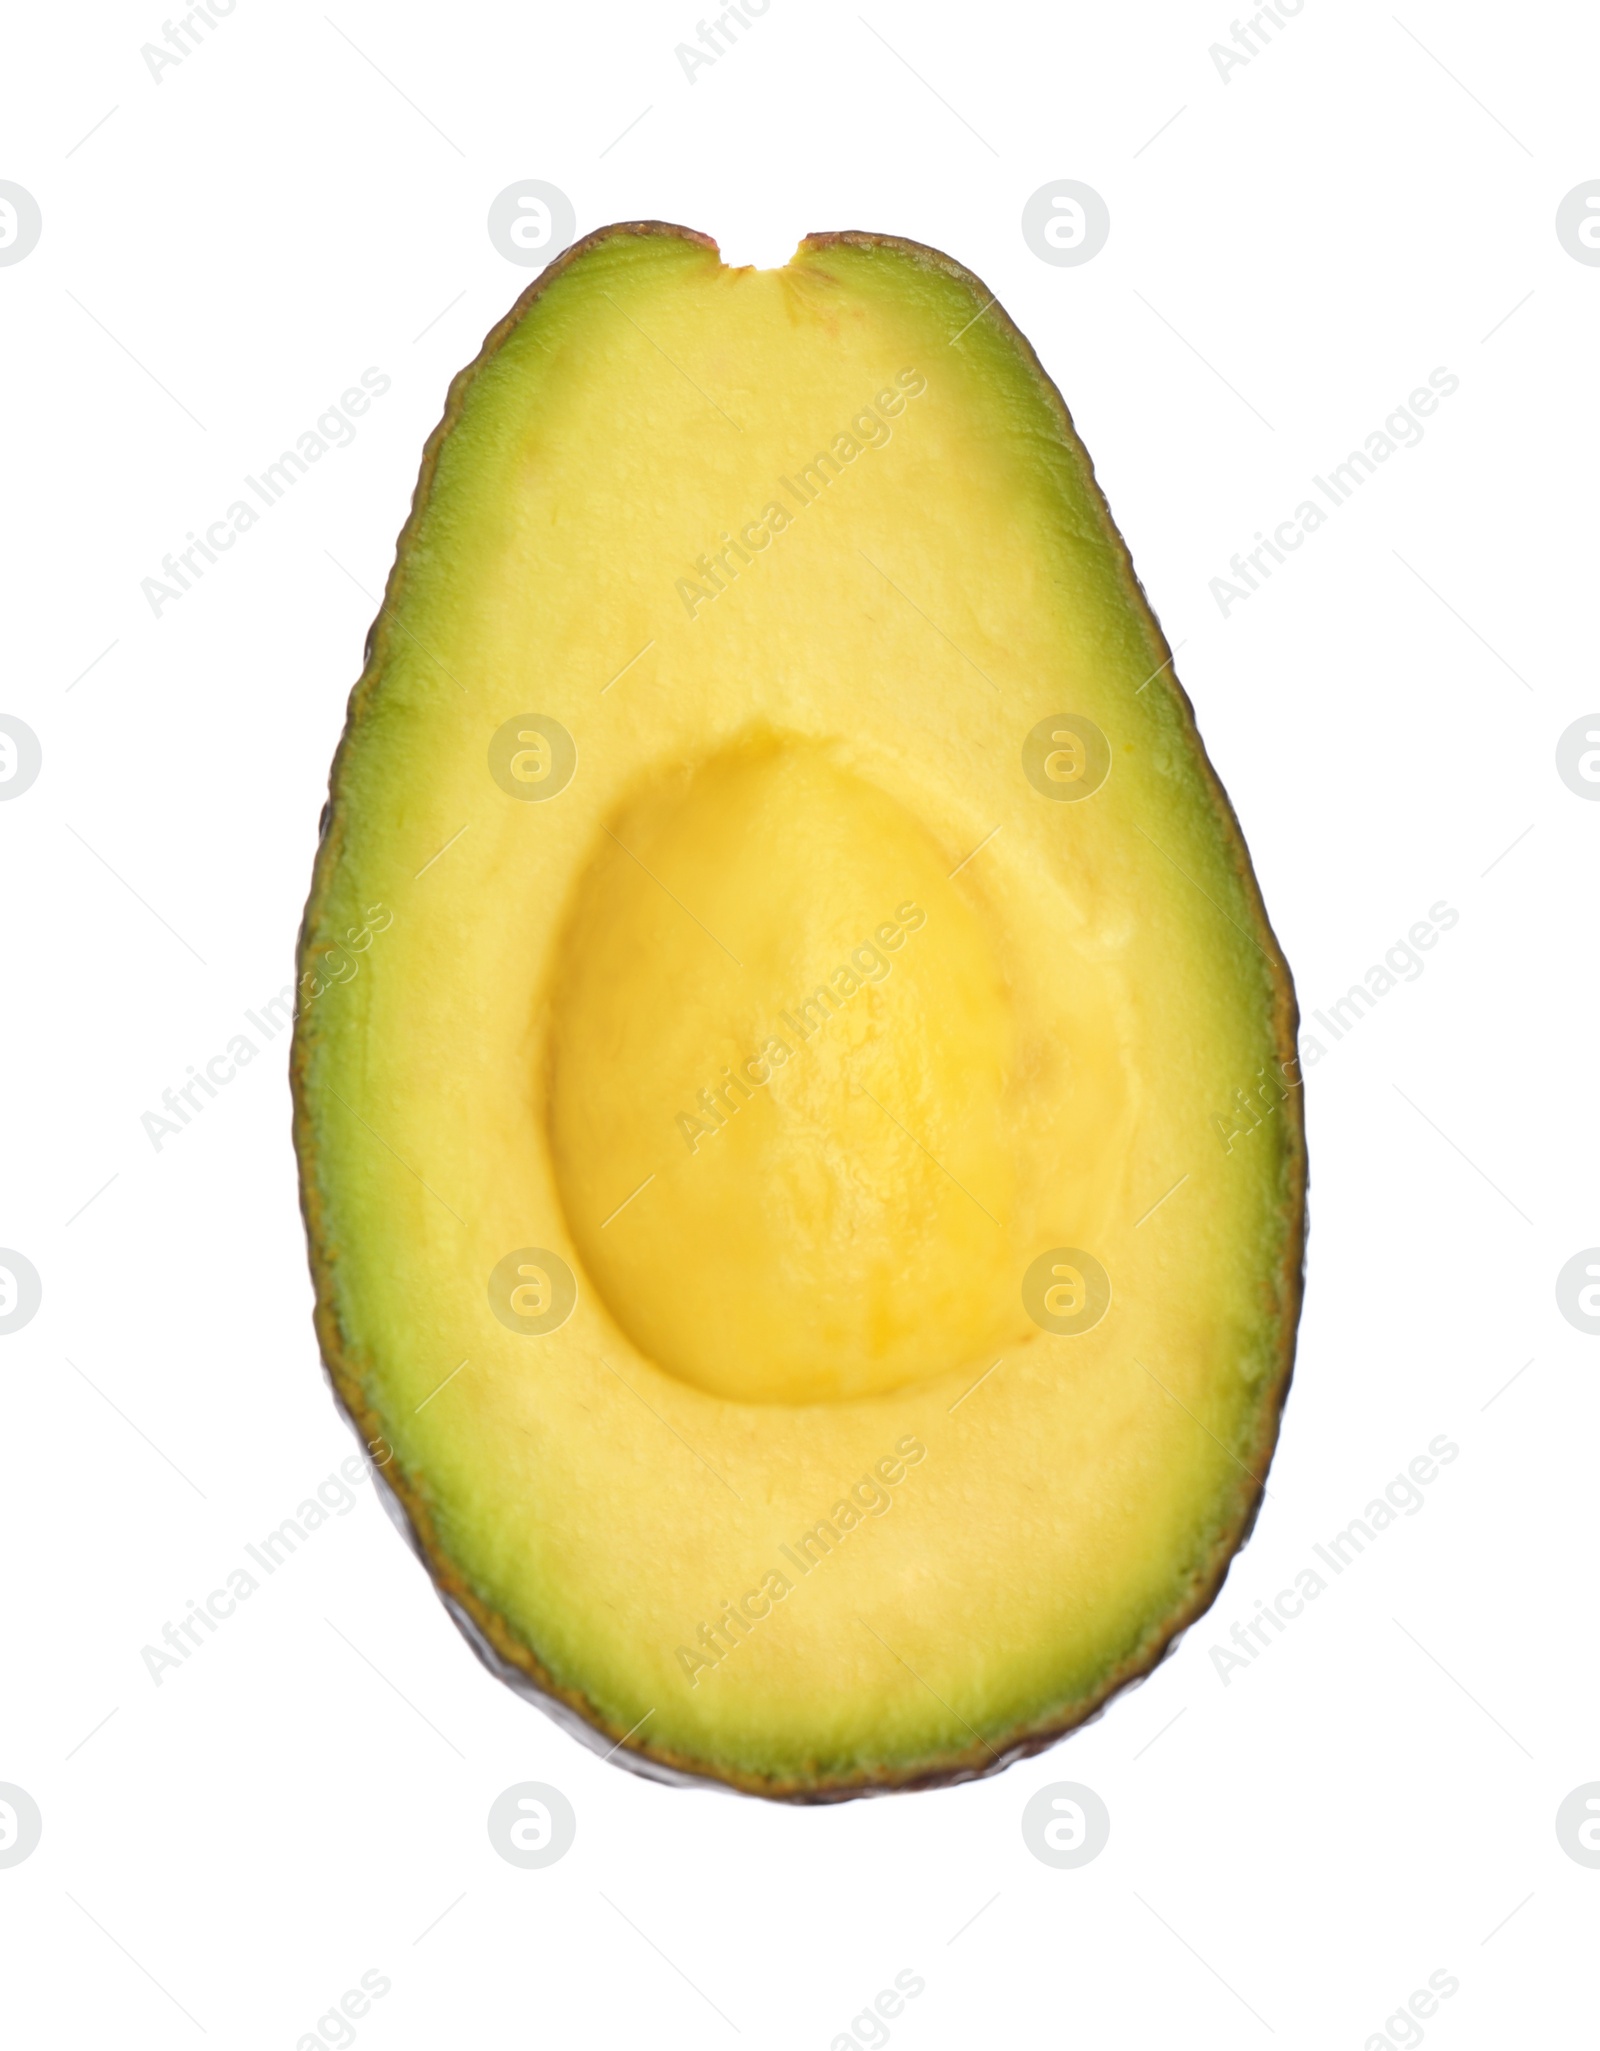 Photo of Half of ripe avocado isolated on white